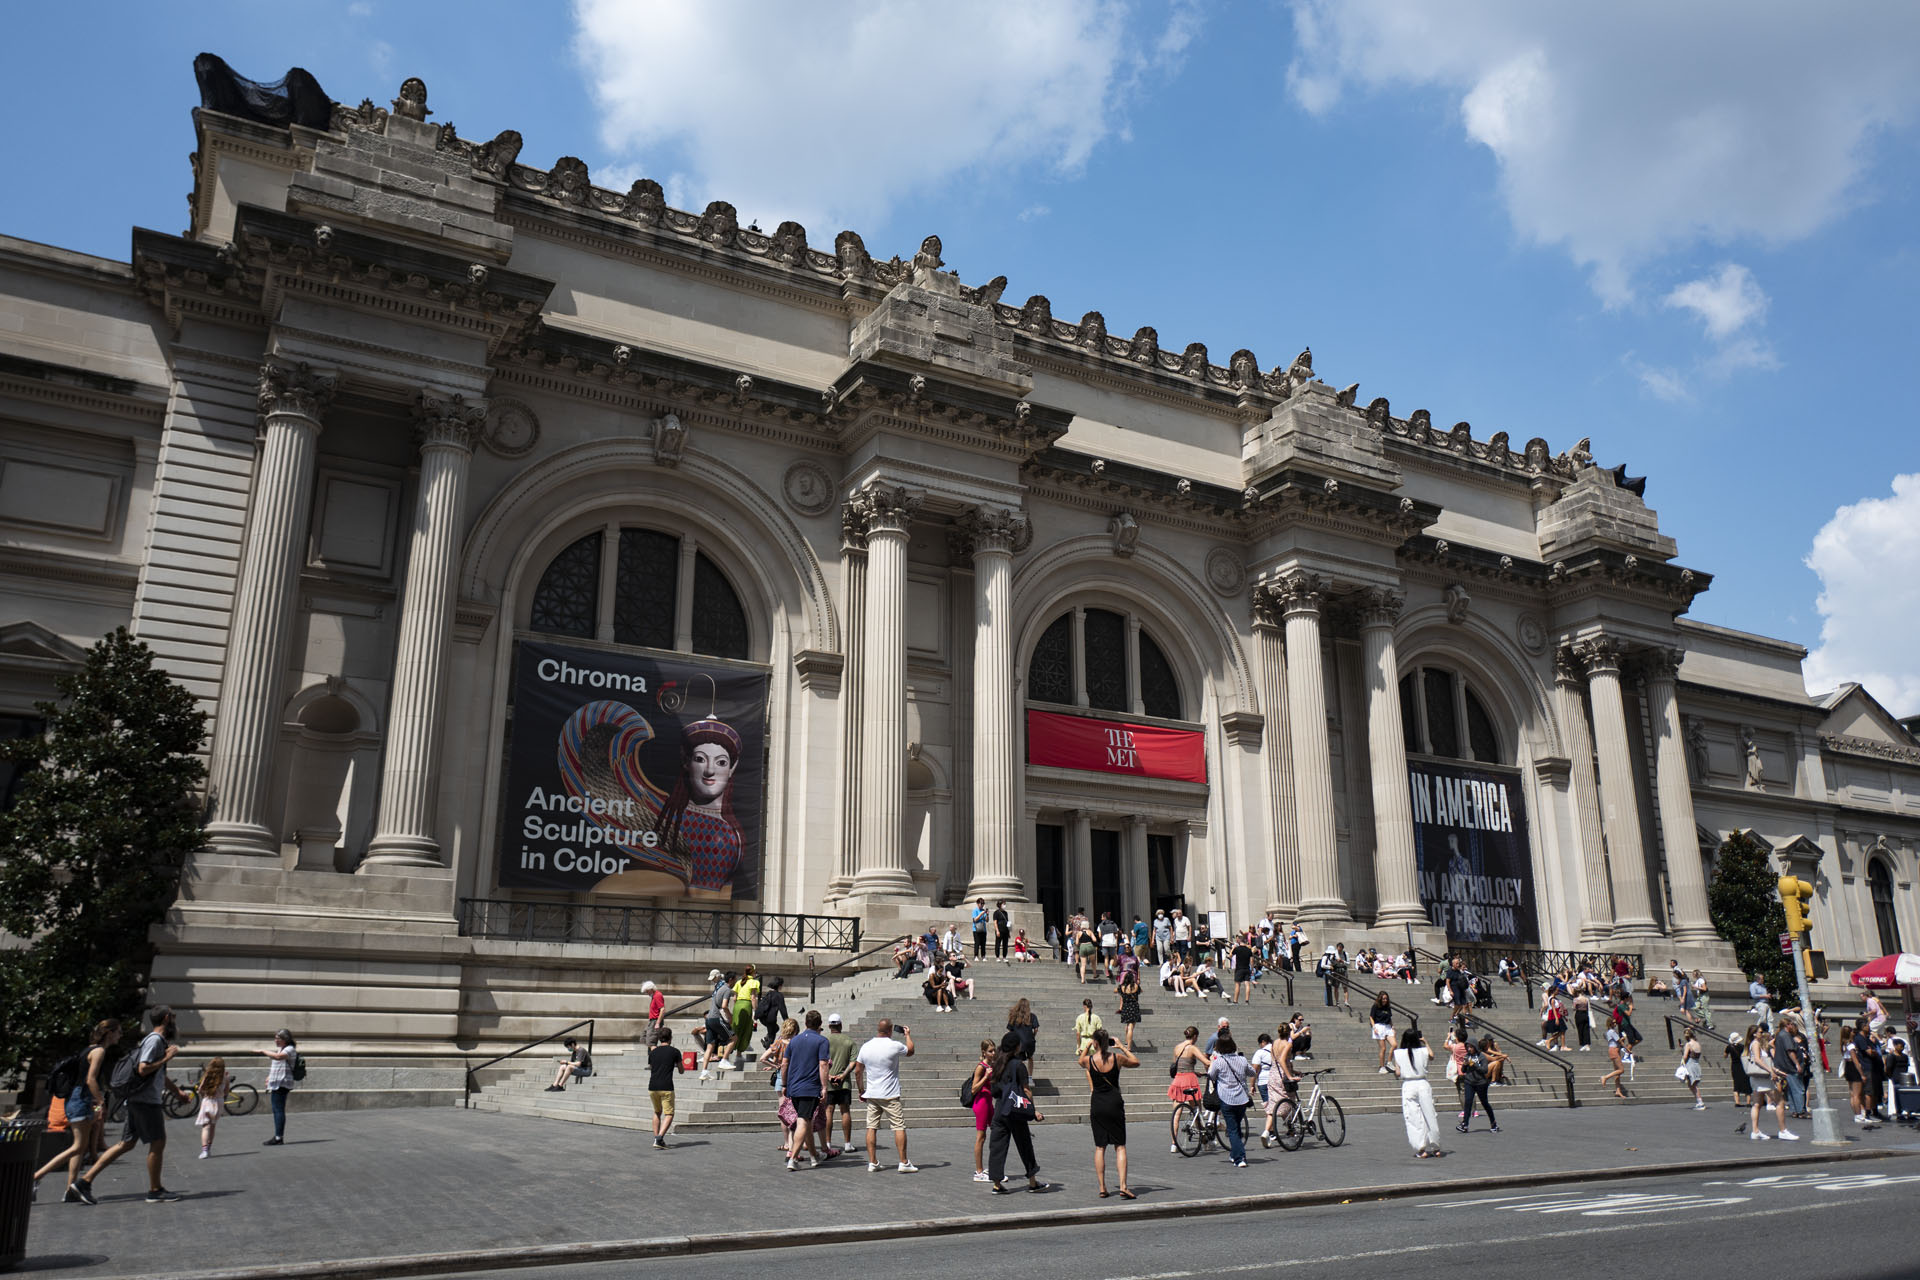 Metropolitan Museums in New York